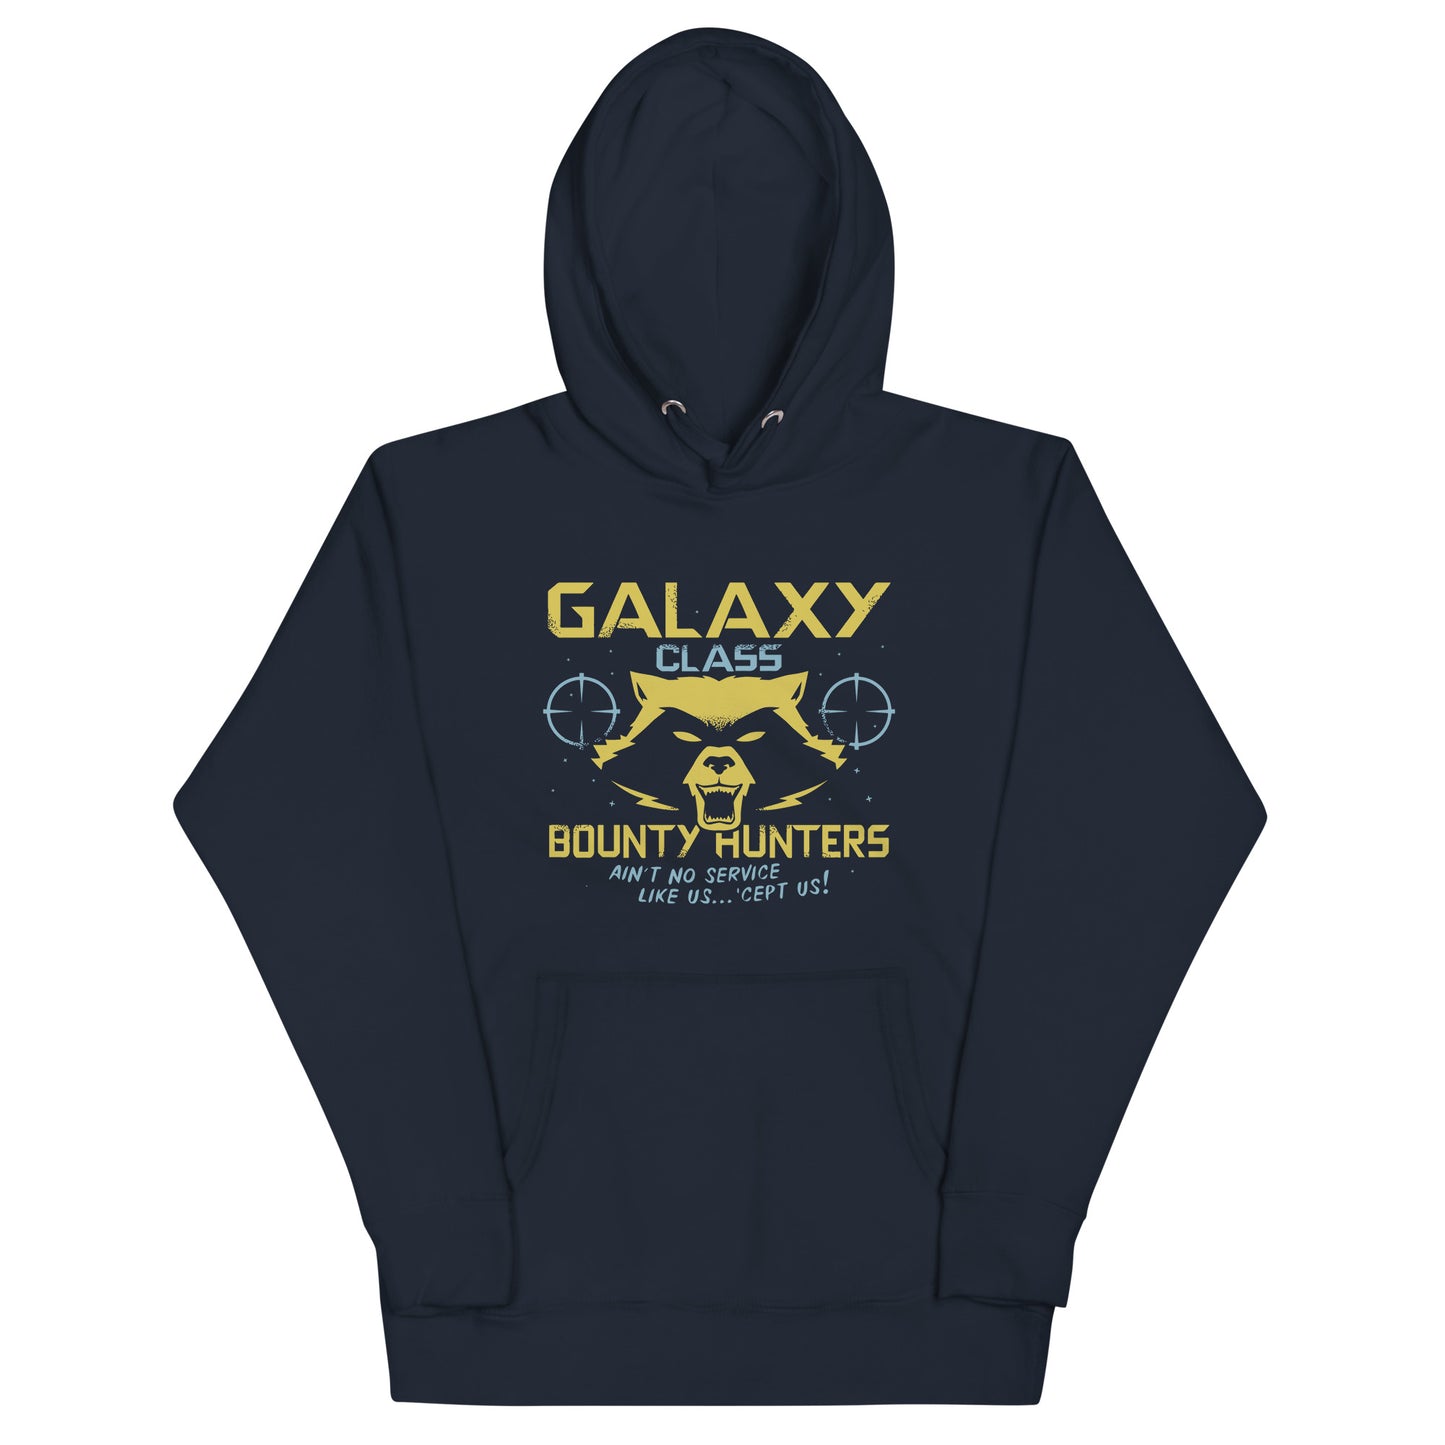 Galaxy Class Bounty Hunters Unisex Hoodie